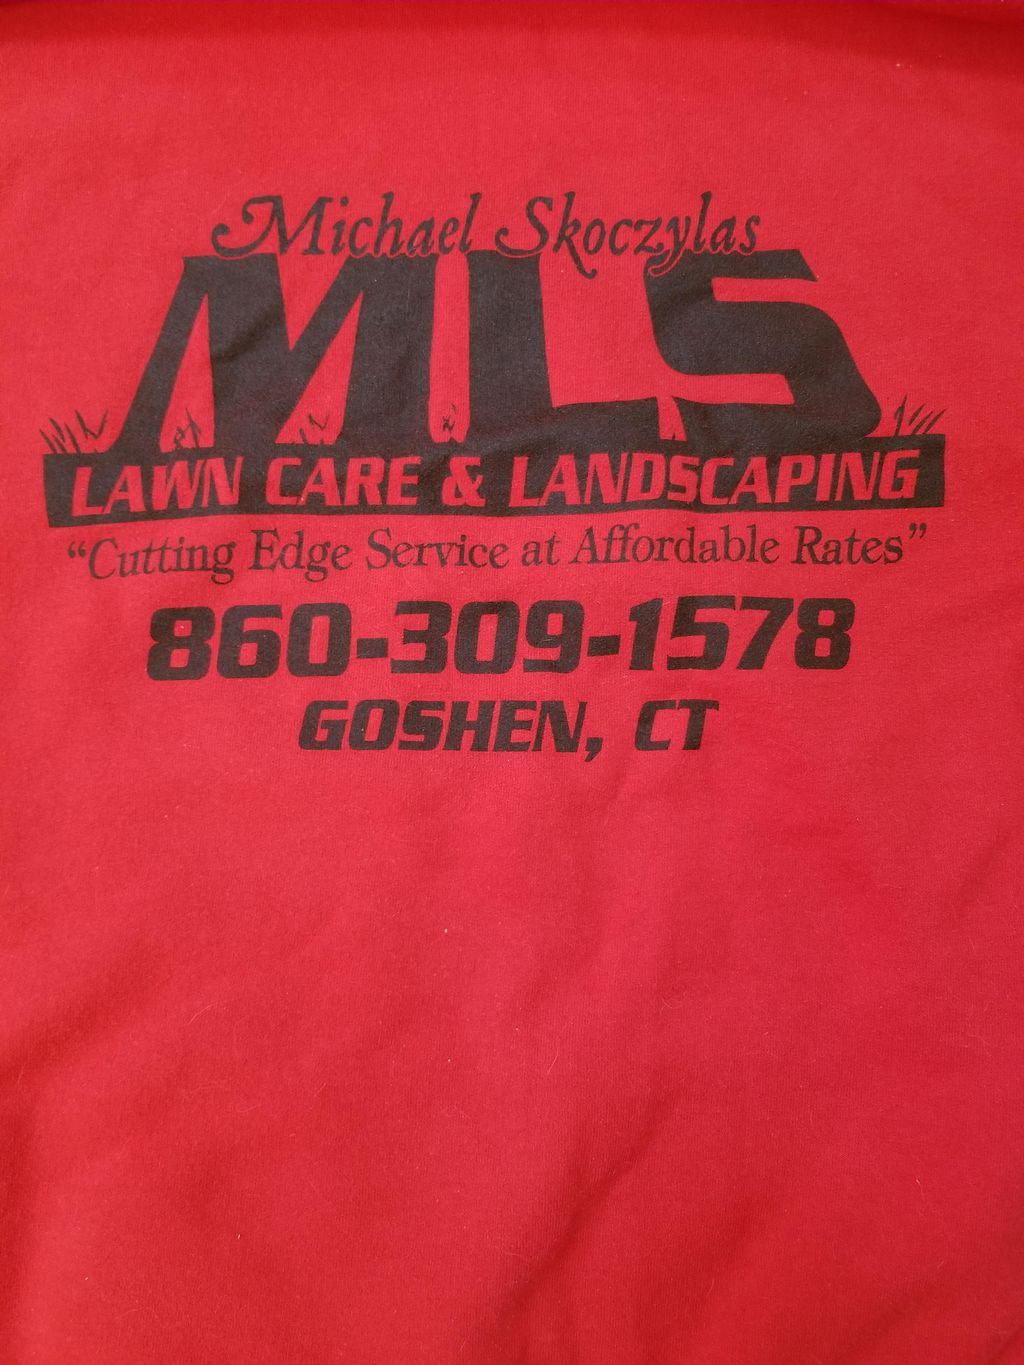 MLS lawn care & landscaping- michael skoczylas